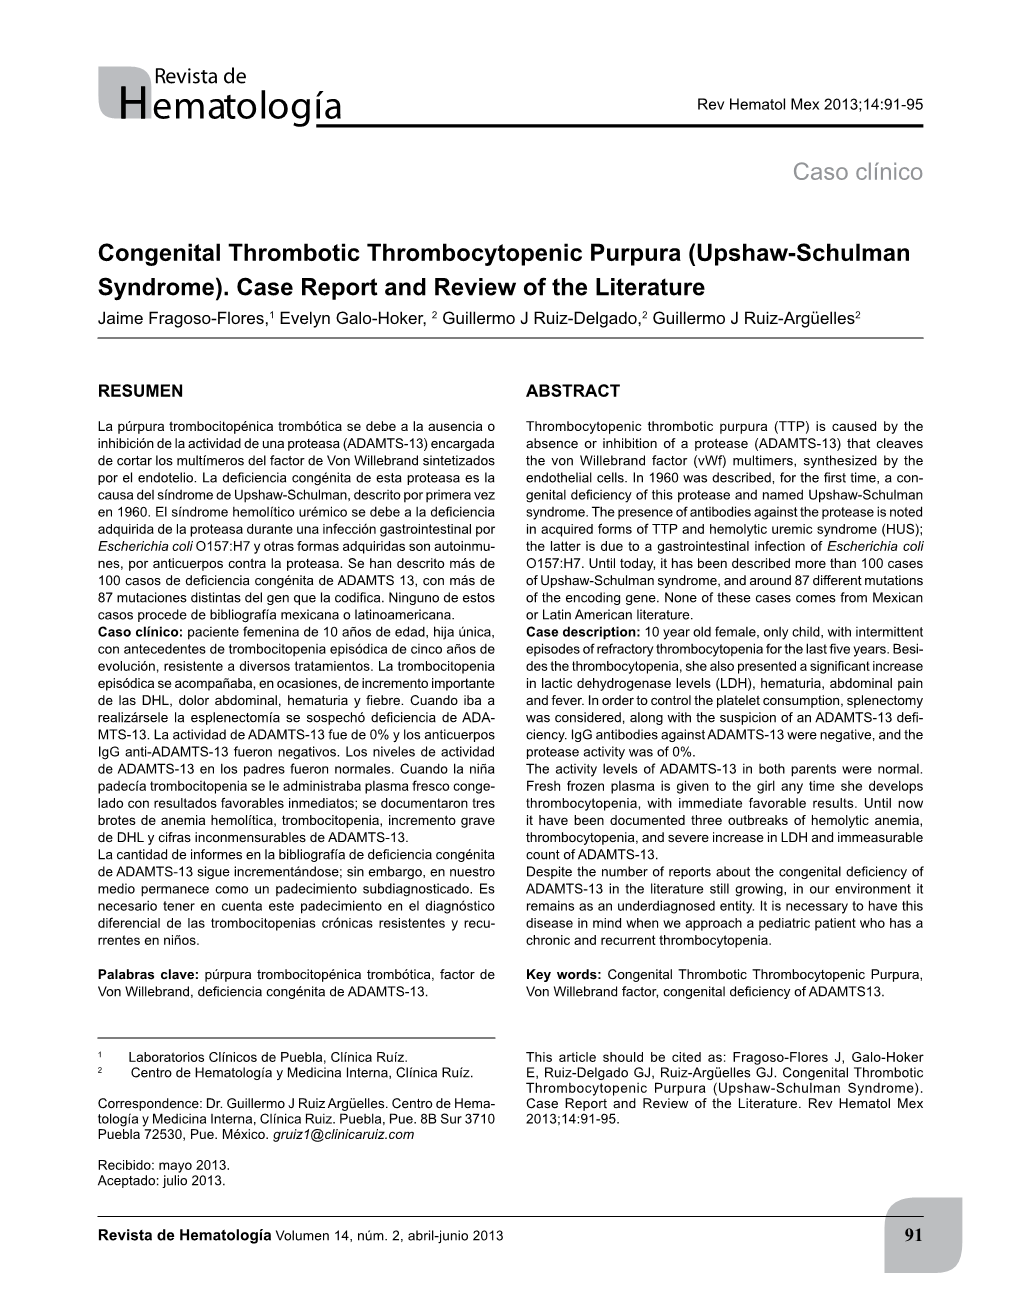 Congenital Thrombotic Thrombocytopenic Purpura (Upshaw-Schulman Syndrome)